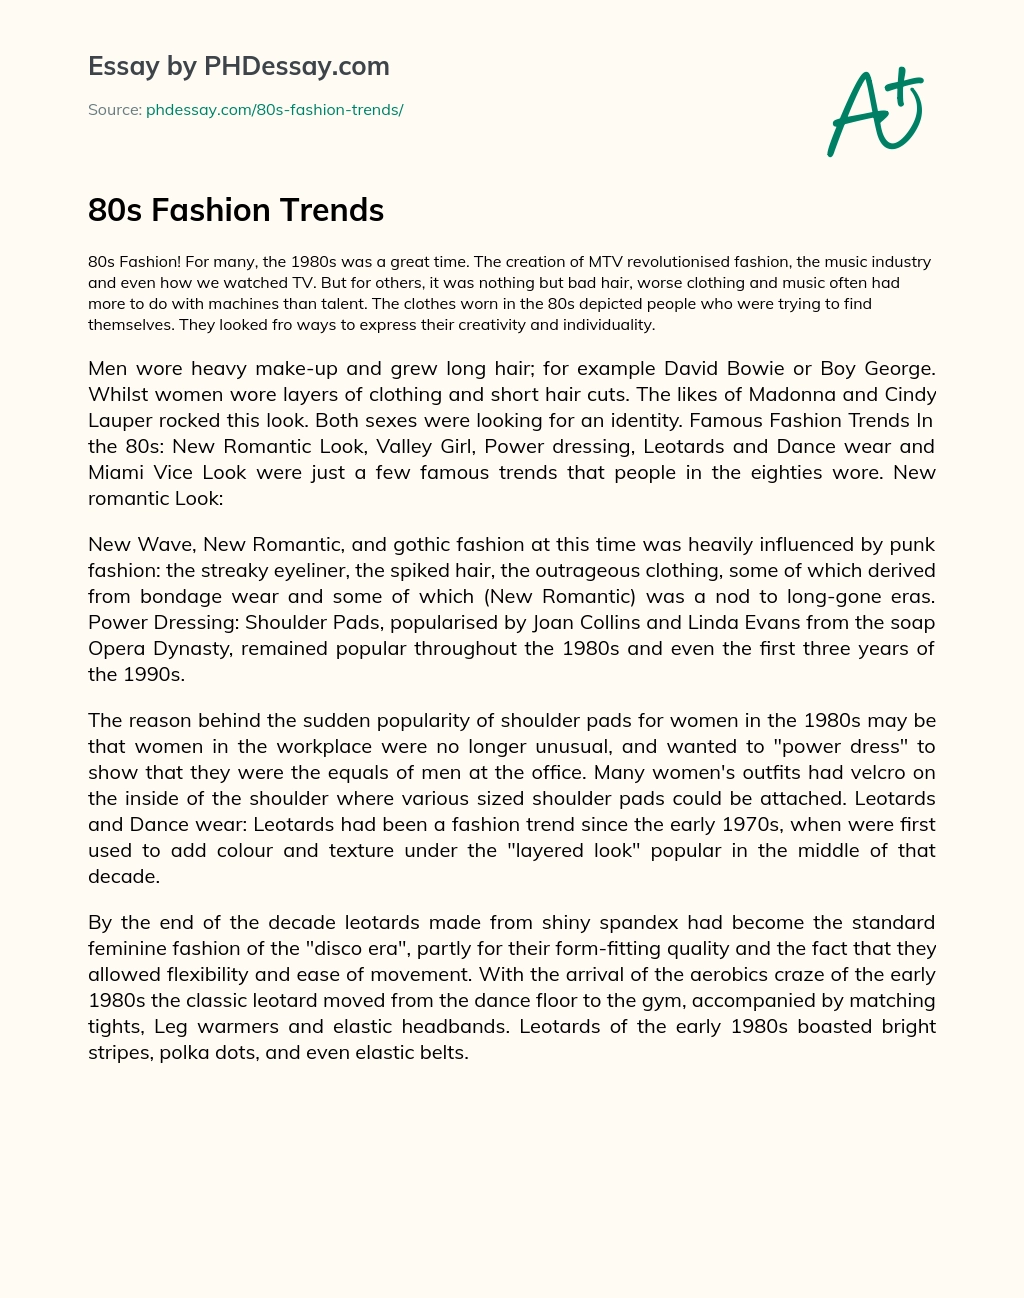 80s Fashion Trends essay